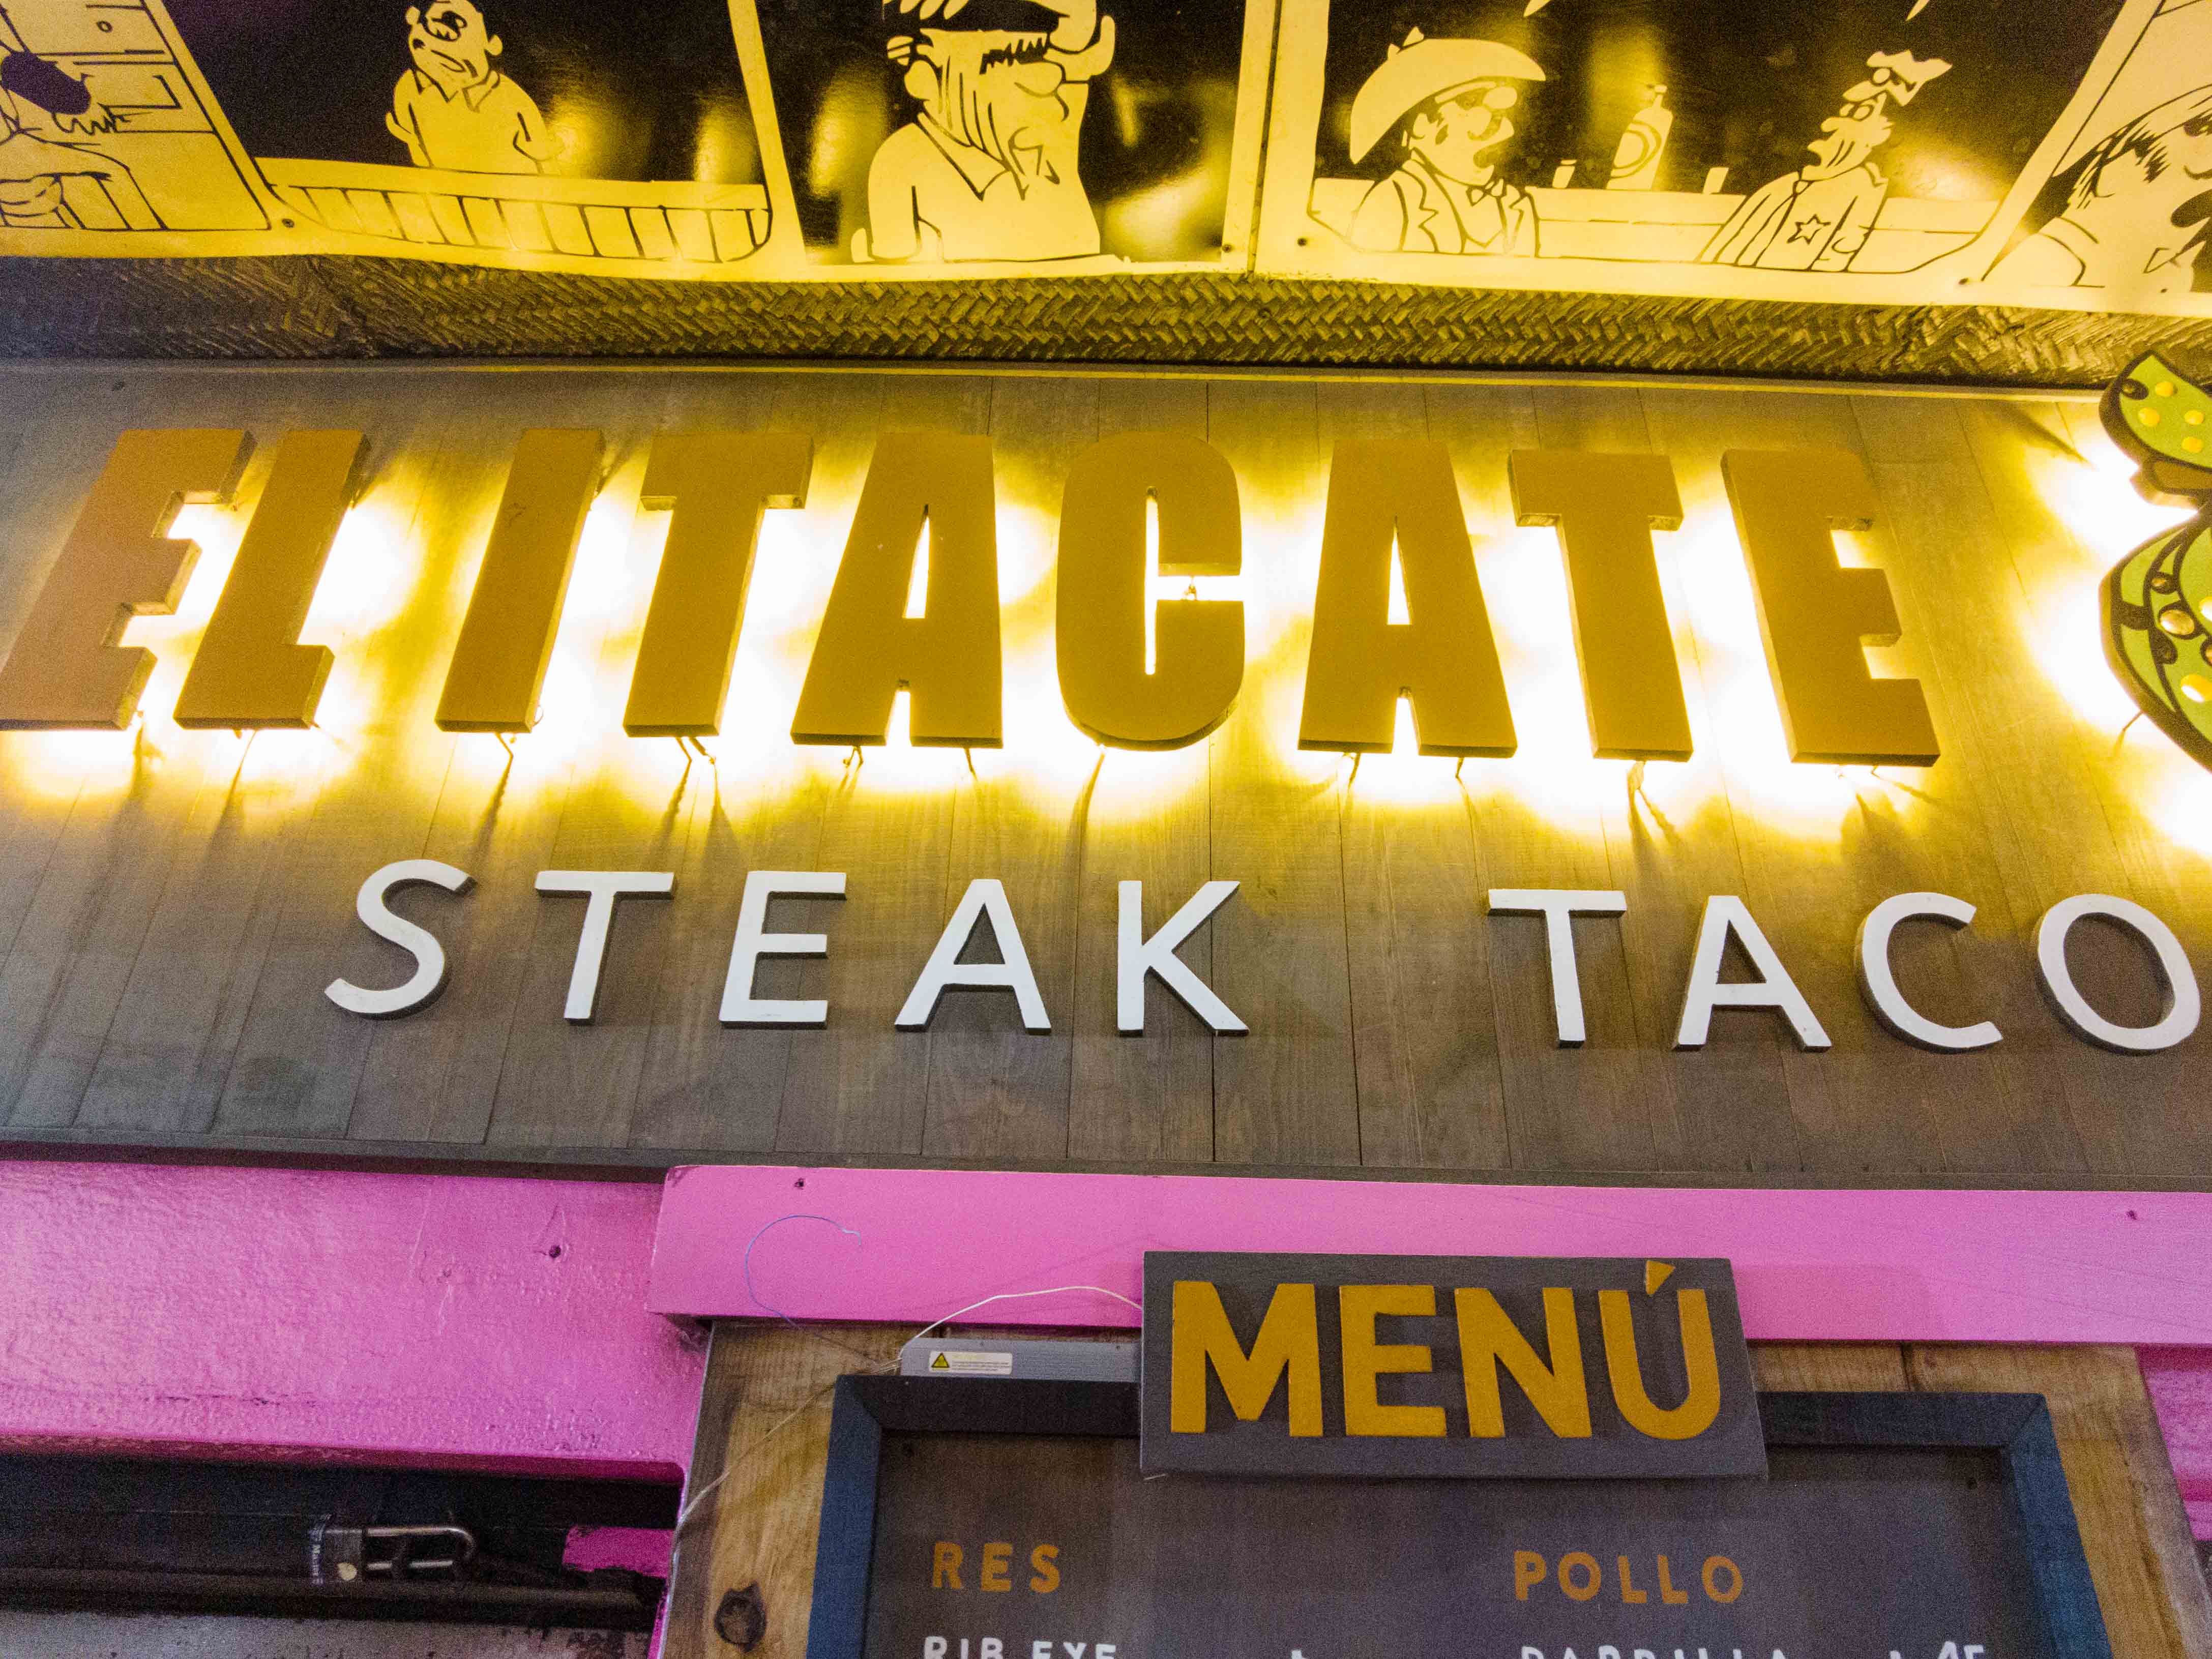 Illuminated sign of Itacate restaurant in Sayulita